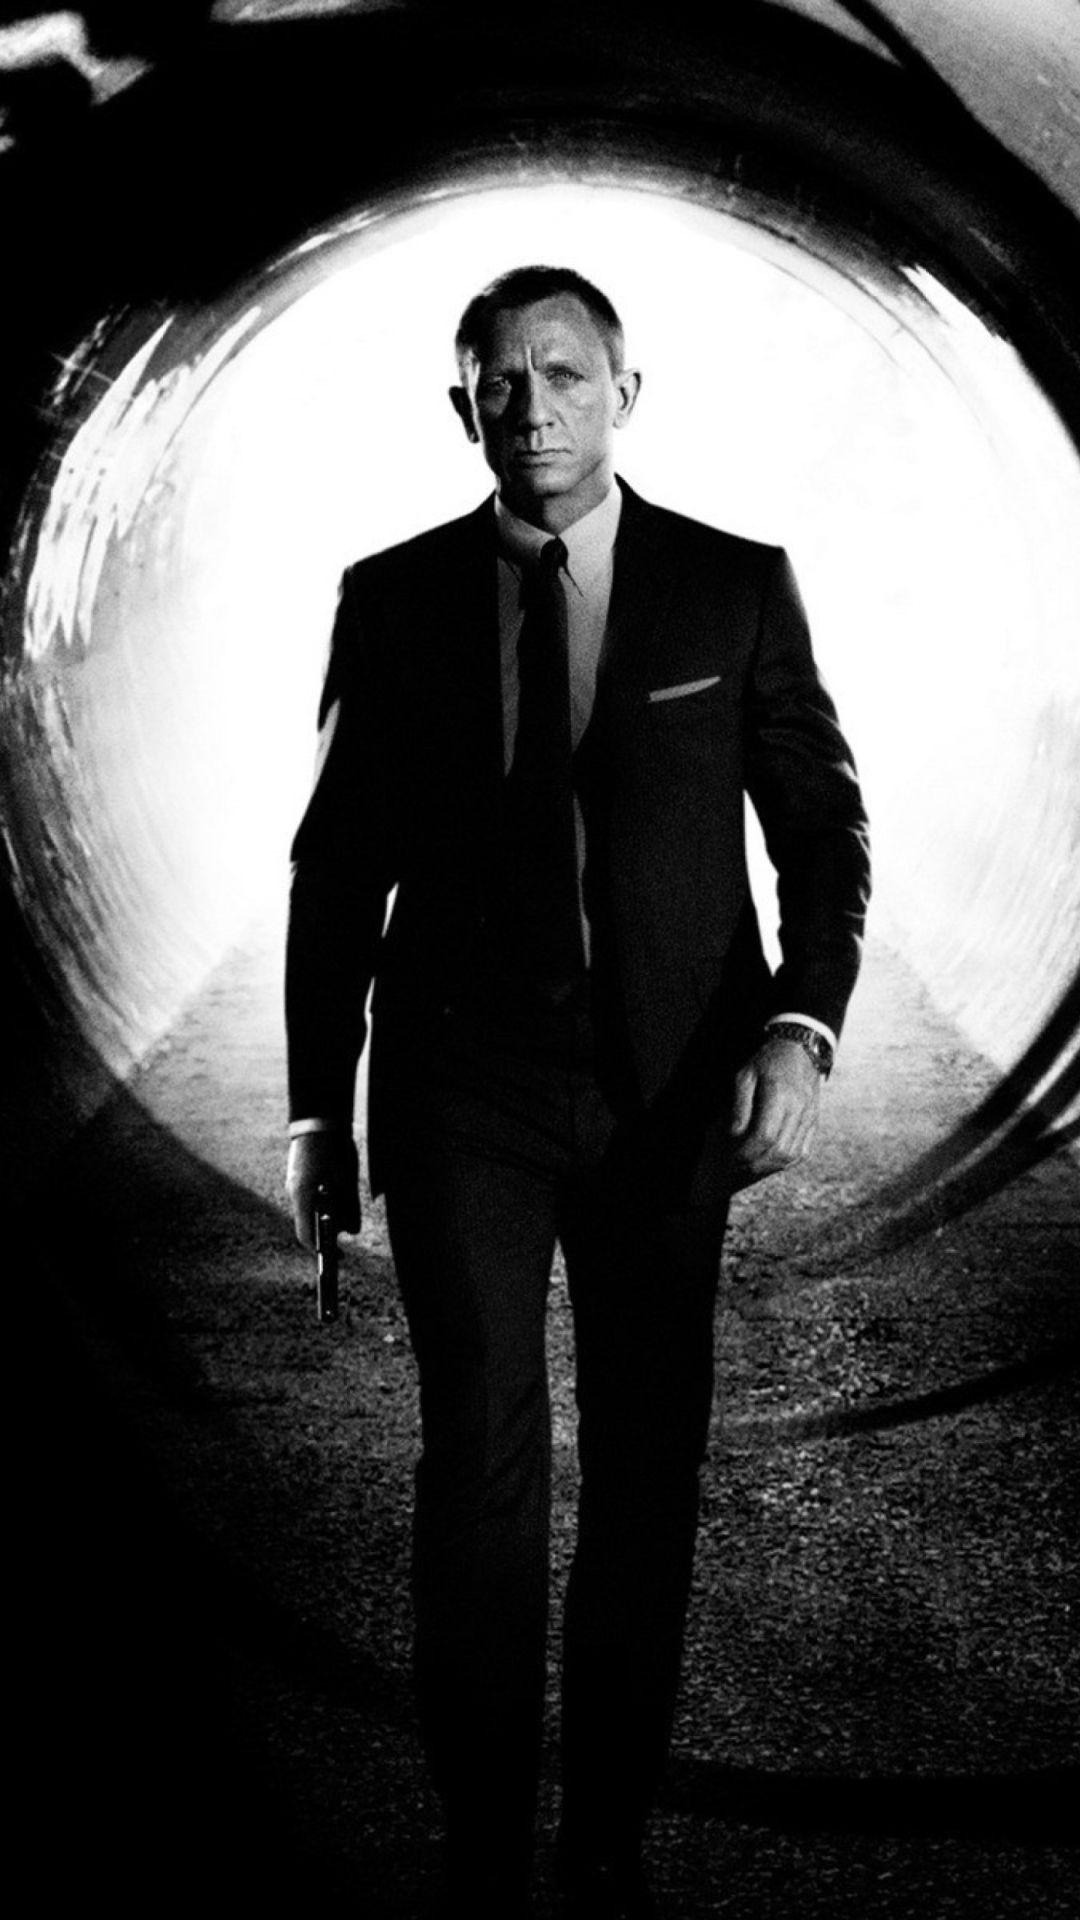 James Bond Iphone Wallpapers Top Free James Bond Iphone Backgrounds Wallpaperaccess